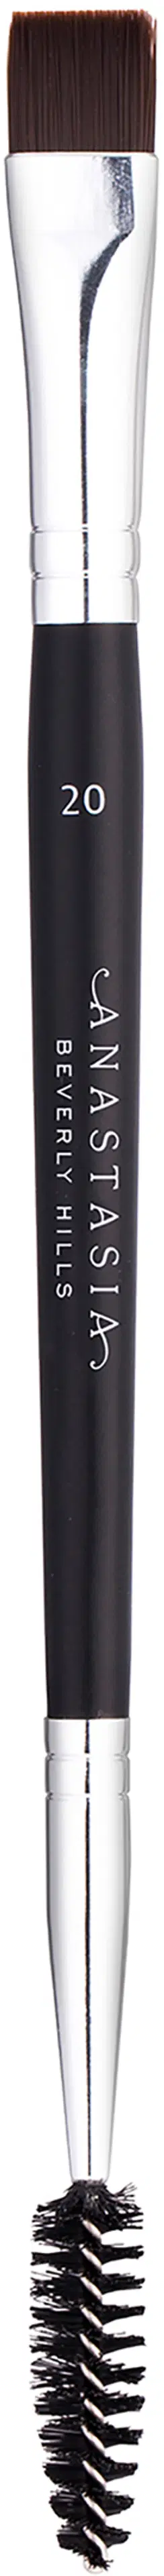 Anastasia Beverly Hills Brush 20 -sivellin